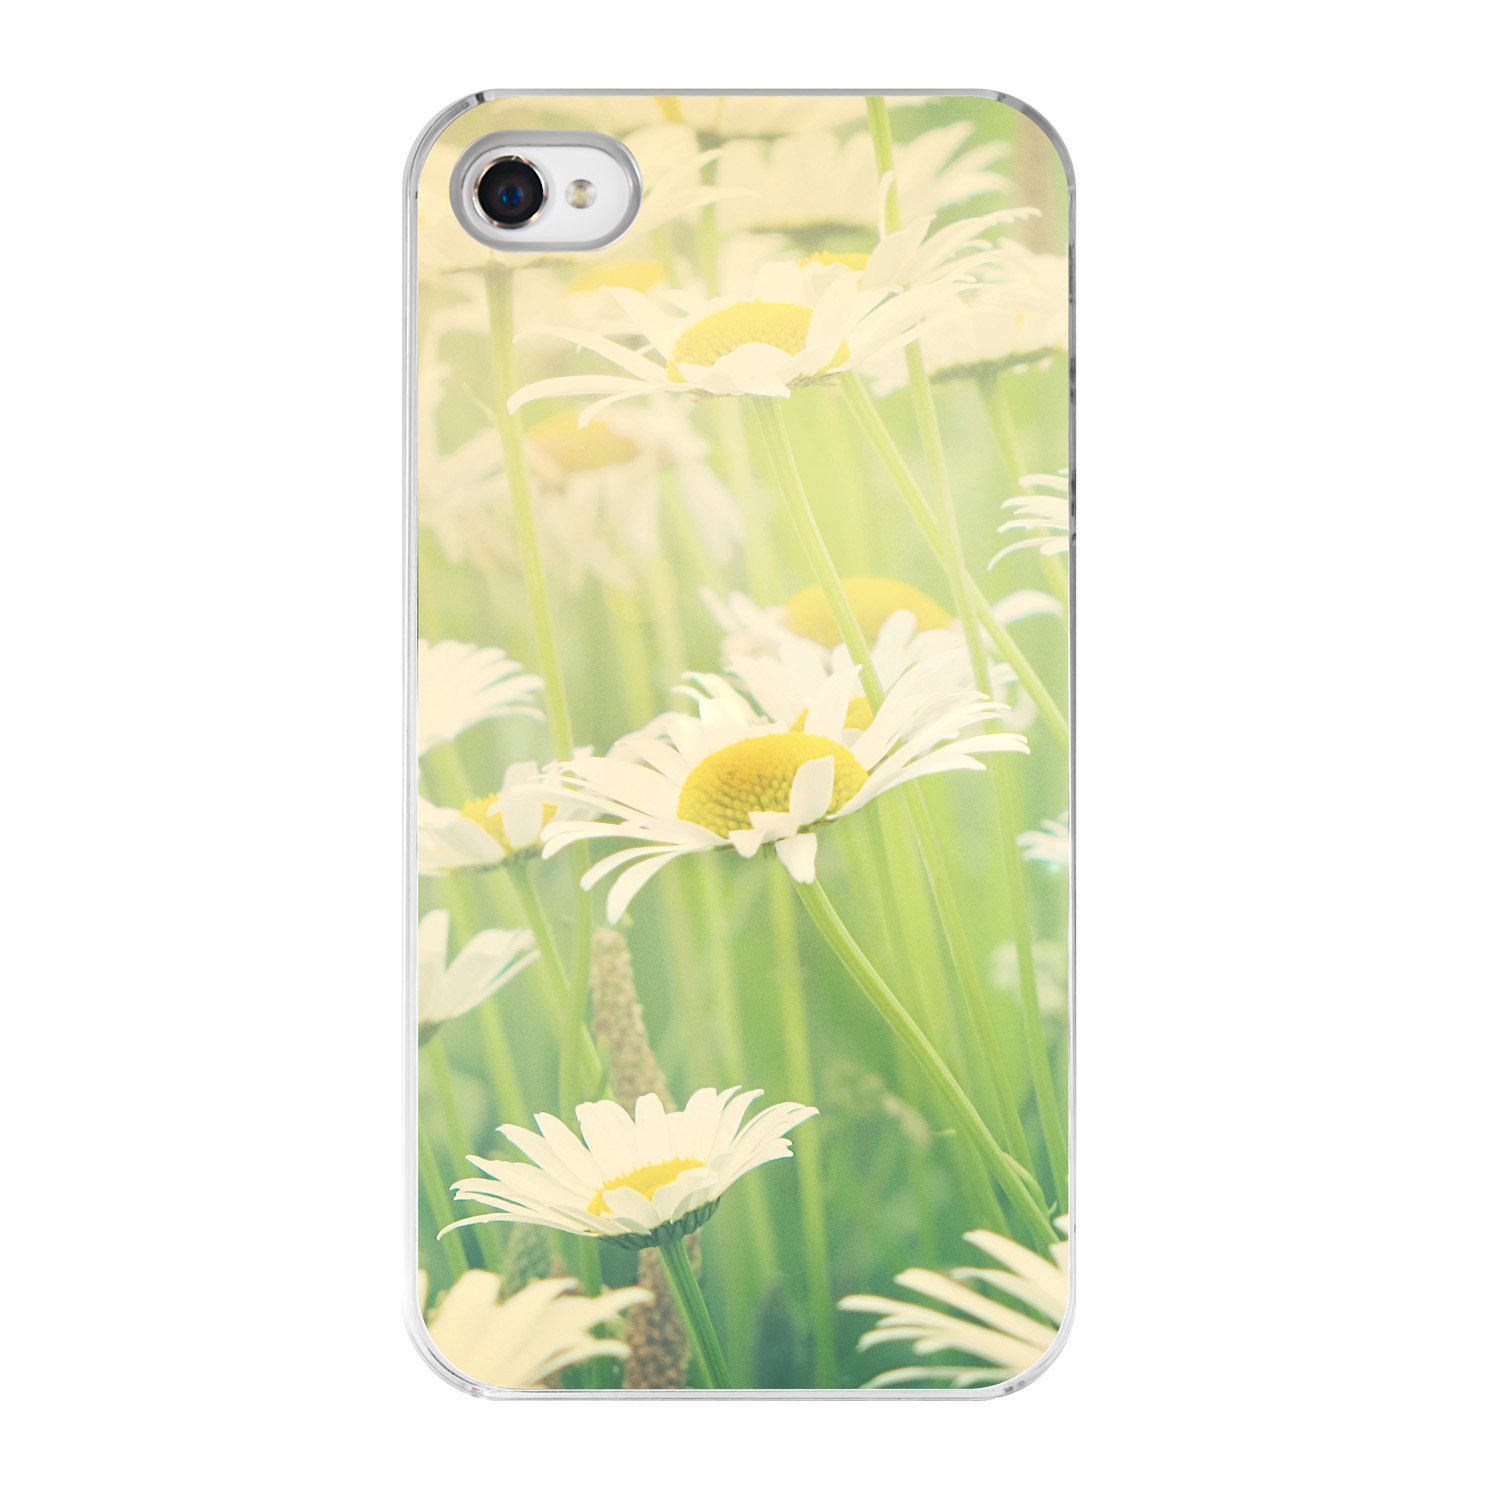 Daisy iPhone Case, iPhone 5 Case, iPhone 4 Case, 4s Case, Daises iPhone Cover, Boho Flower iPhone Case, Girly Pretty, Floral Daisy Flowers - AmyTylerPhotography